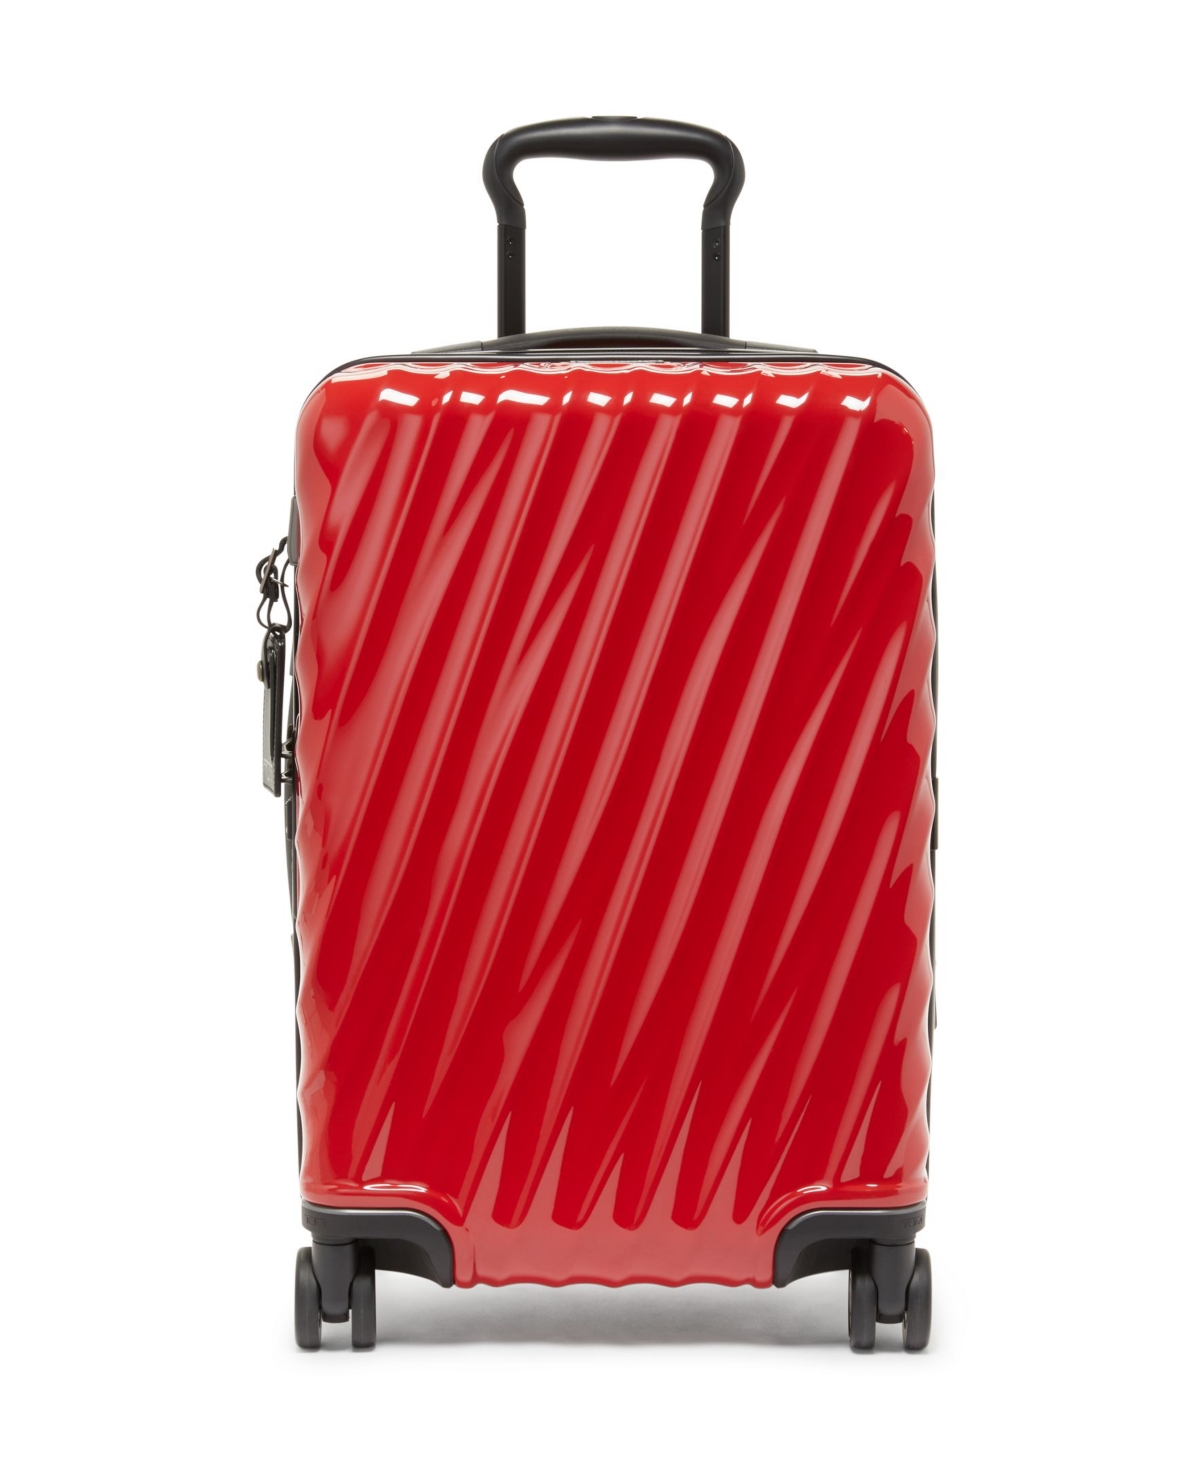 TUMI - 19 Degree International Expandable Spinner Suitcase - Blaze Red